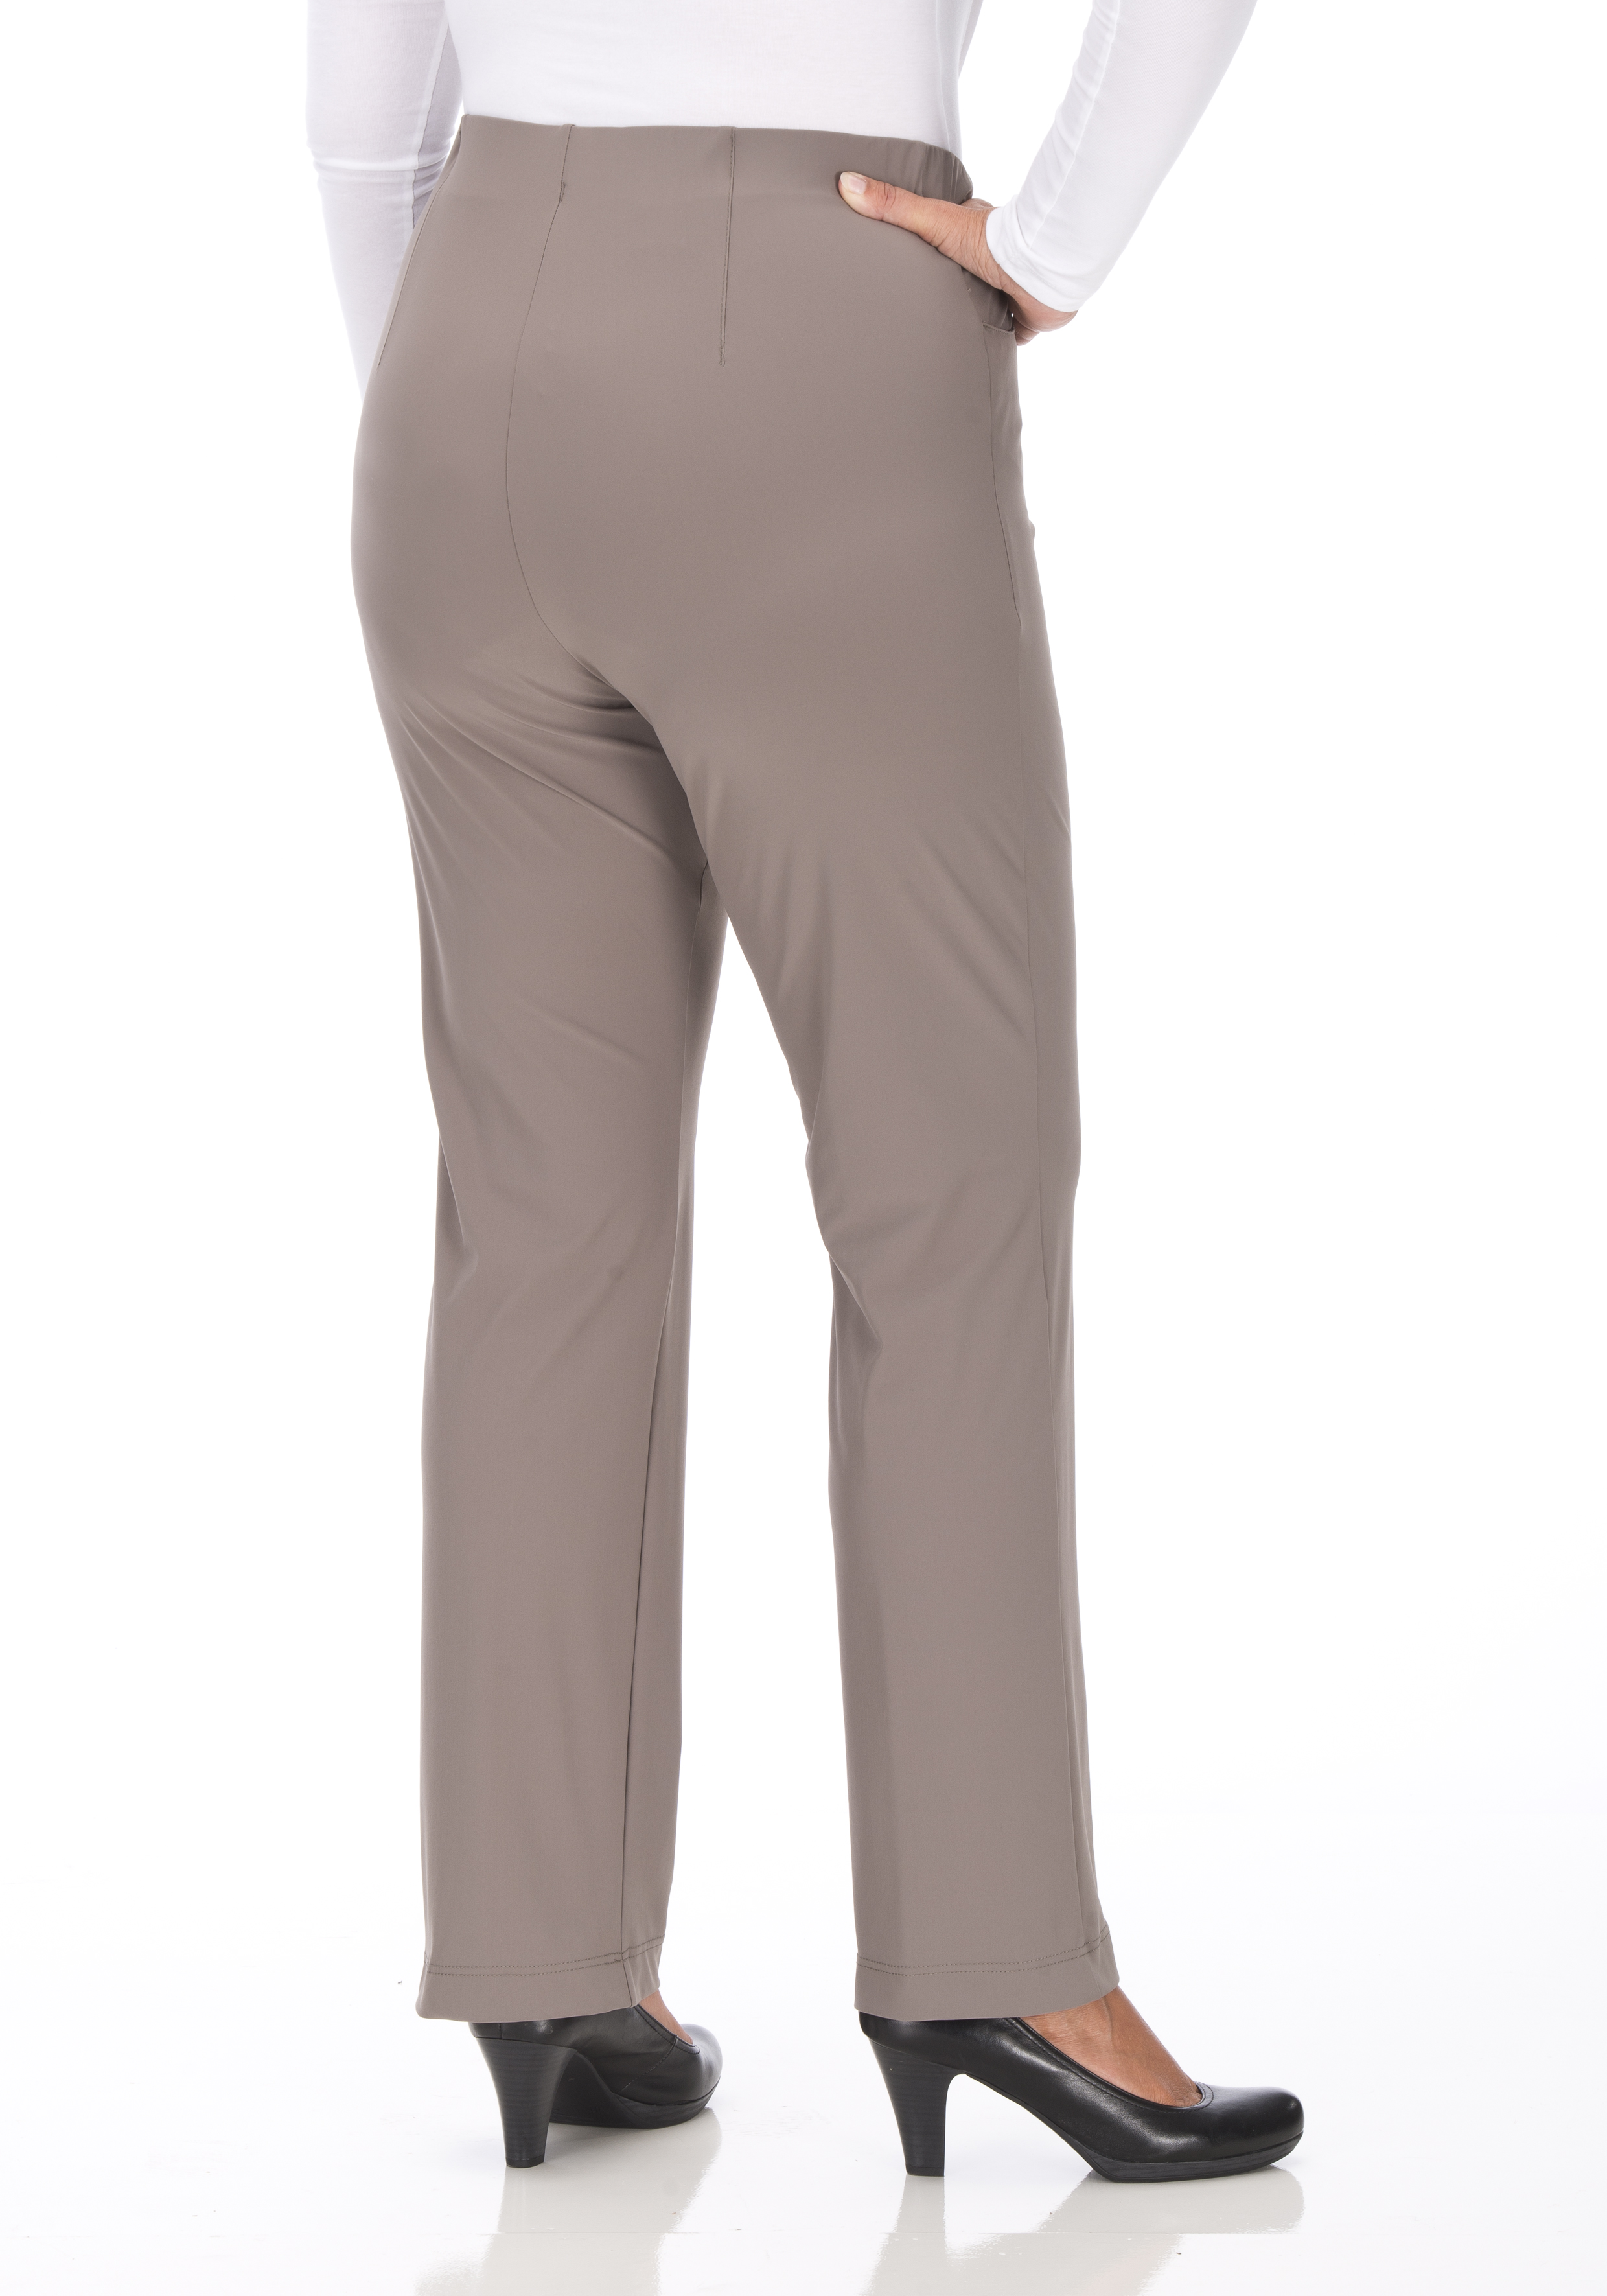 KjBRAND pants sensitive long SUSIE winter quality - Curvy by BiNA